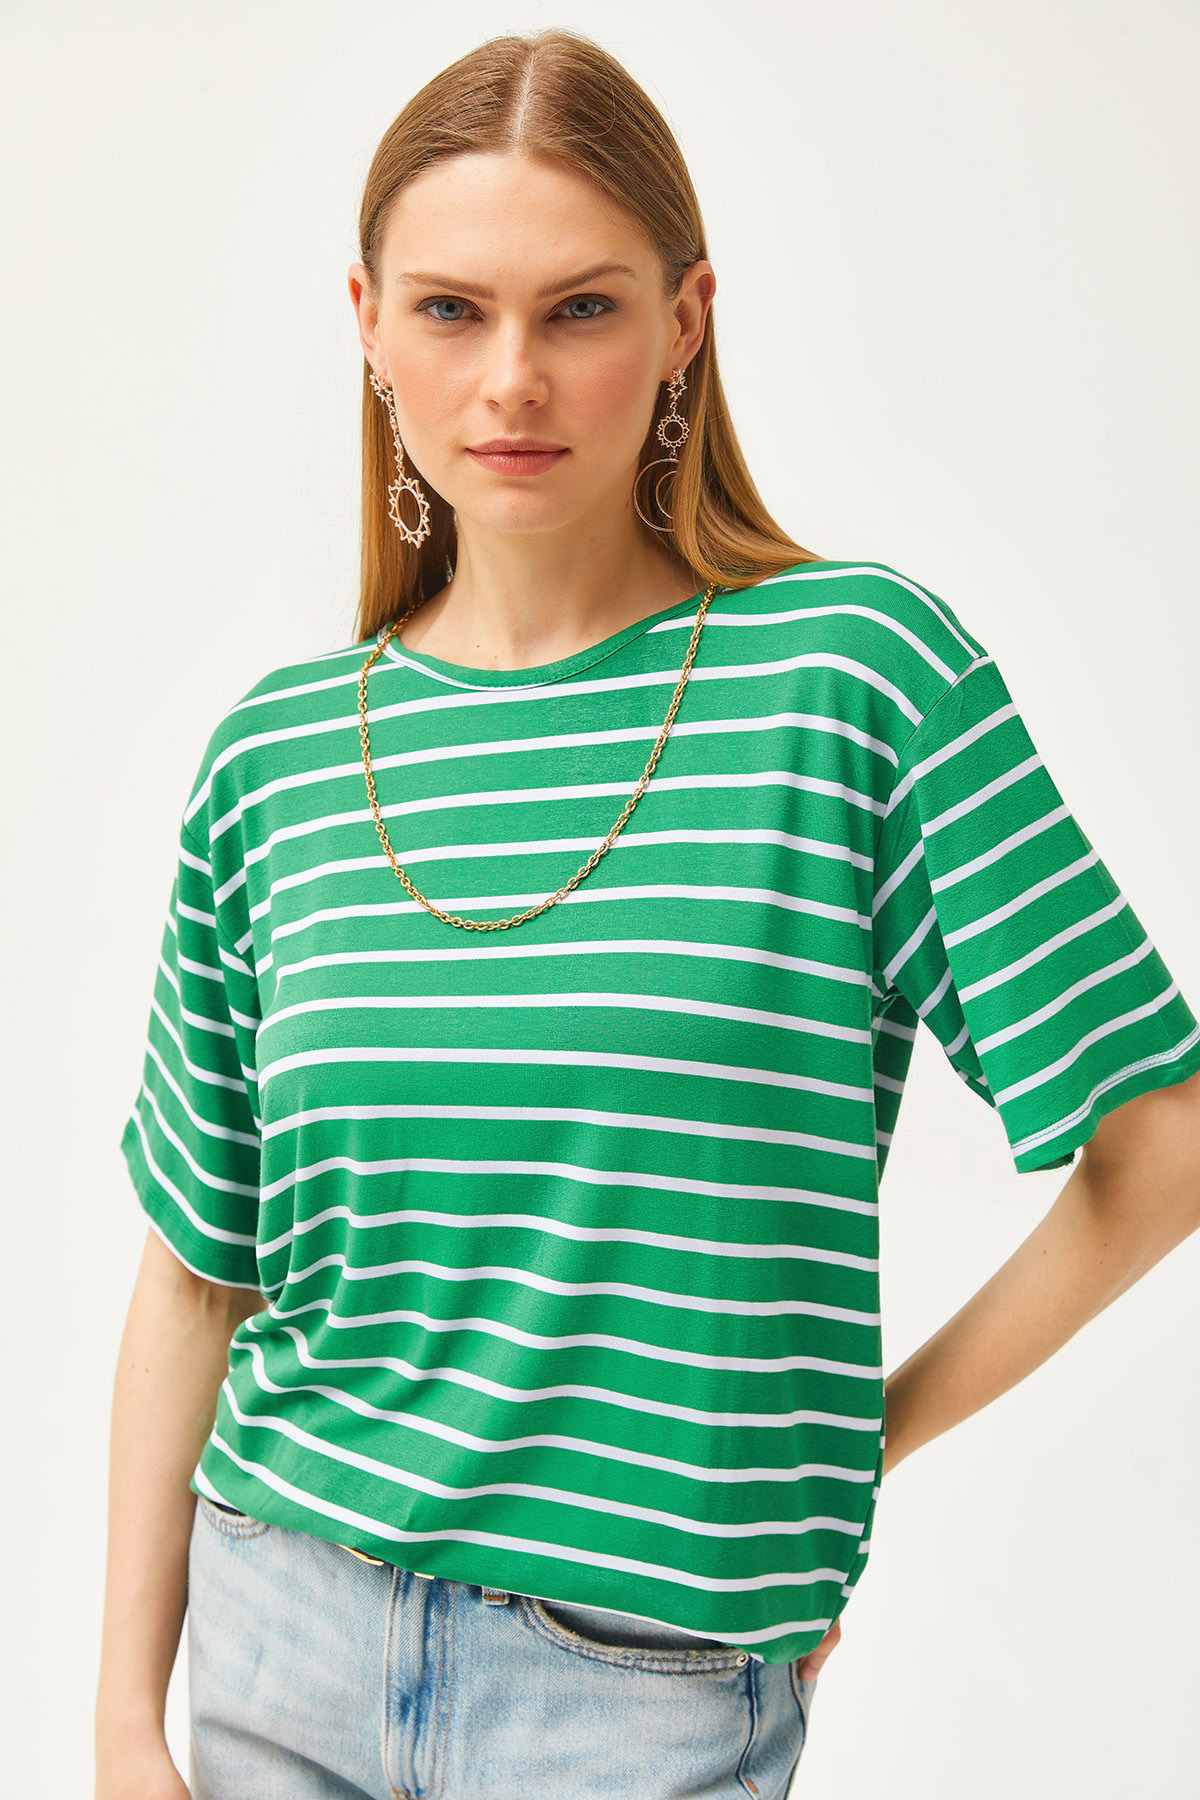 Olalook Women's Grass Green Striped Casual T-Shirt